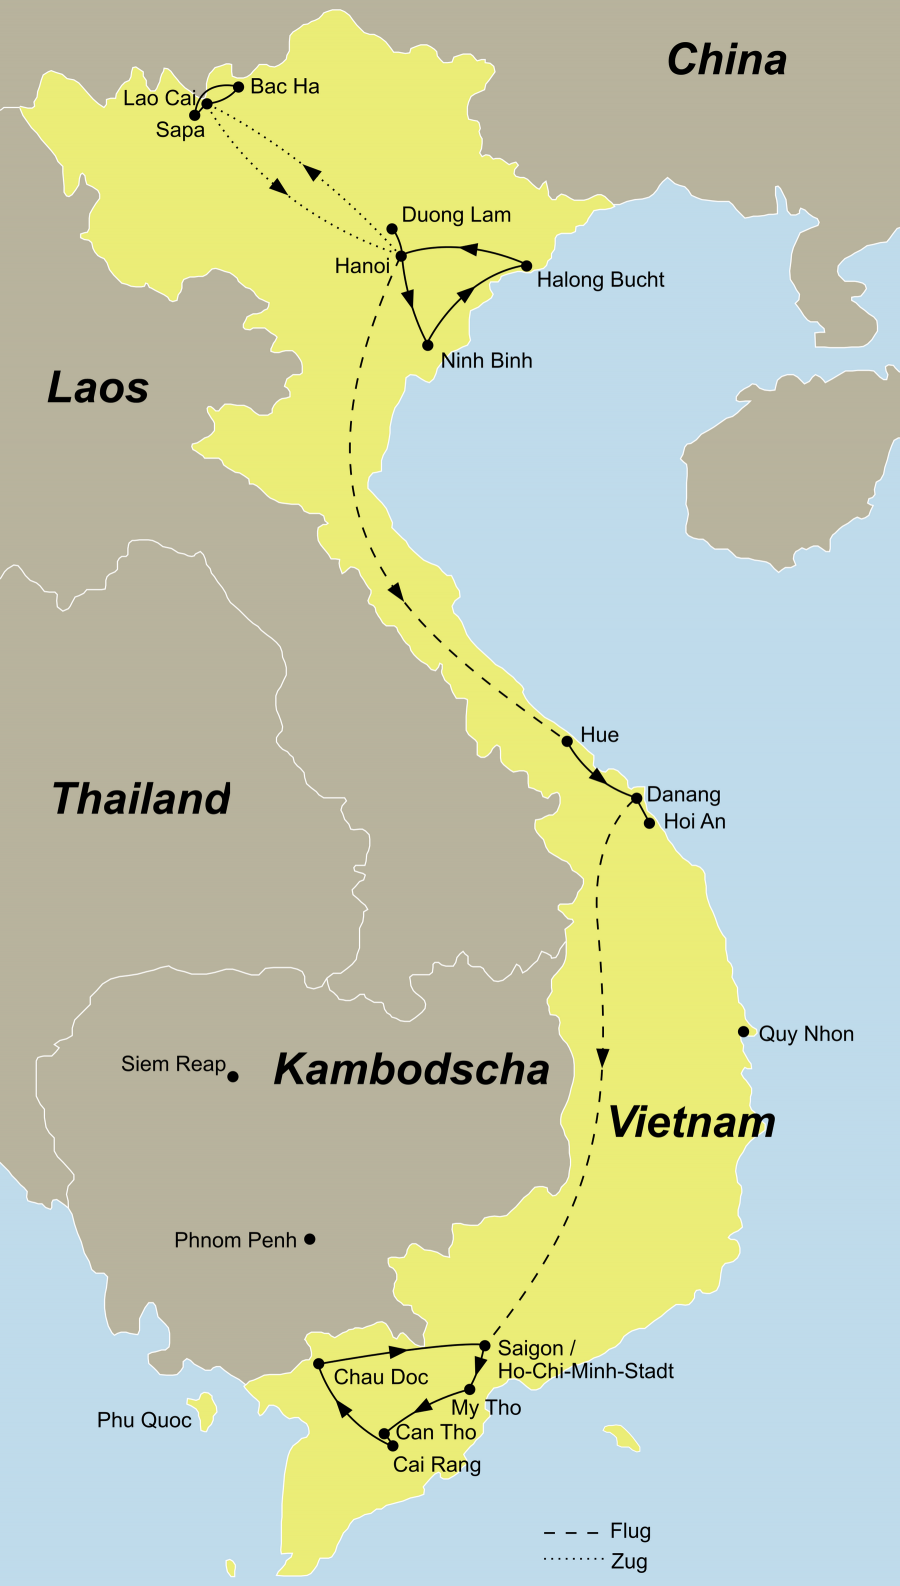 Die Vietnam Rundreise führt von Hanoi über Duong Lam – Hanoi – Lao Cai -- Lao Cai – Sapa -- Bac Ha – Lao Cai – Hanoi -- Ninh Binh – Halong Bucht -- Hanoi – Hue -- Danang – Hoi An -- Danang – Saigon -- Can Tho -- Cai Rang – Chau Doc zurück nach Saigon.